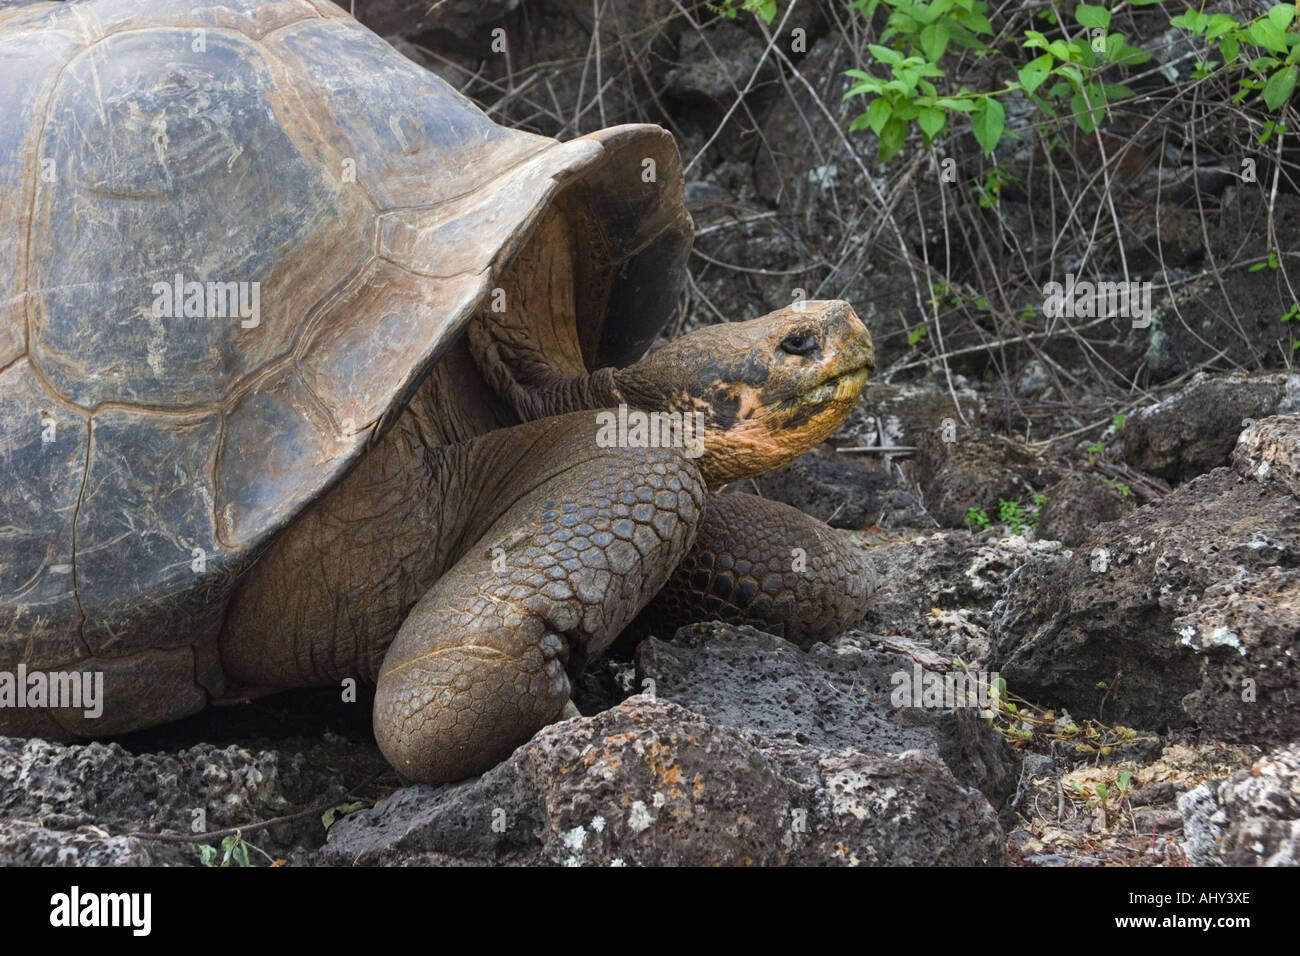 Endangered Giant Tortoise in the Santa Cruz Breeding Centre Galapagos Islands Stock Photo